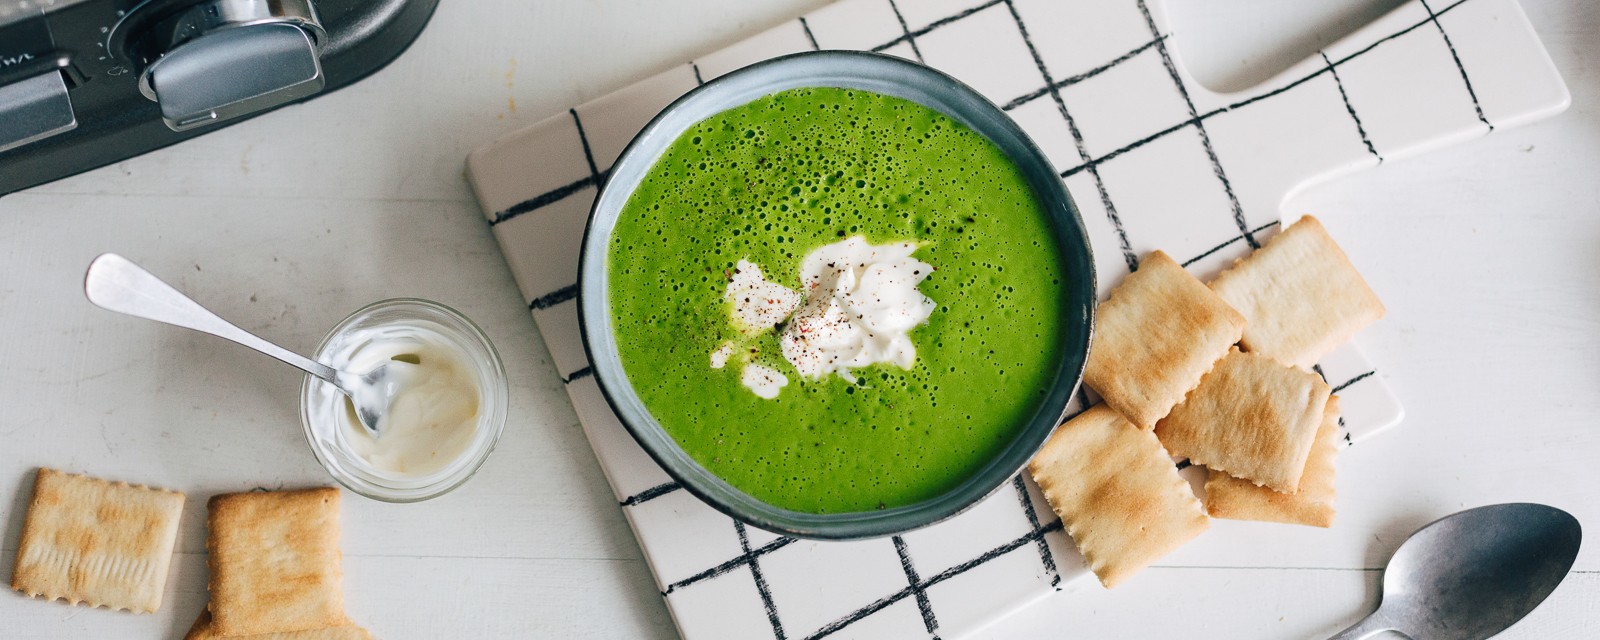 Easy Broccoli Soup Recipe with the Vida Sana™ High Power Blender